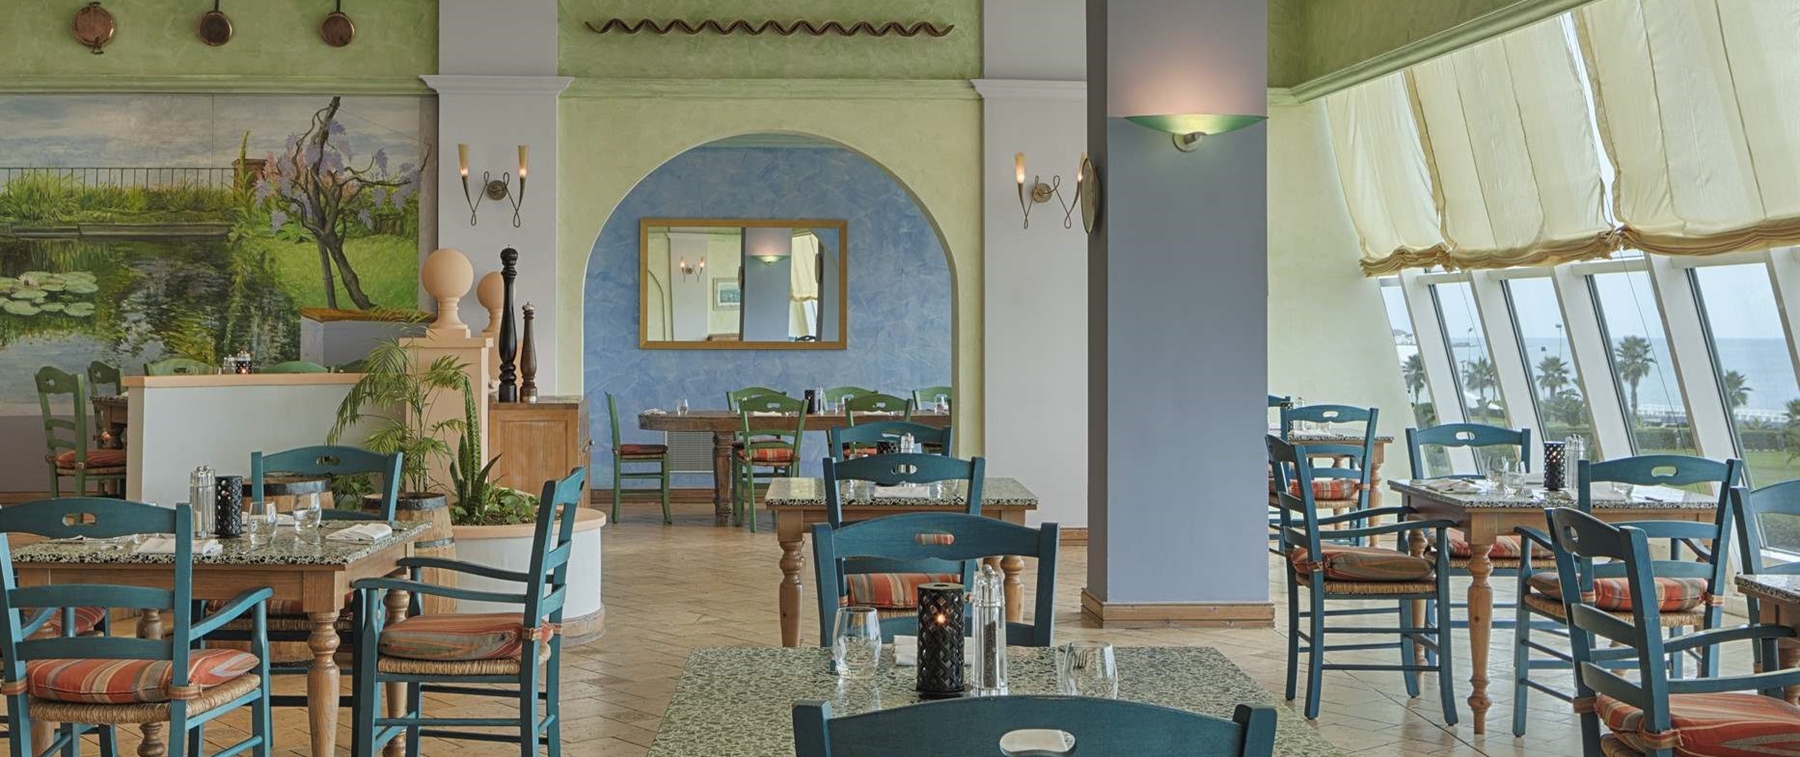 Find Dining Italian Restaurant in Algiers